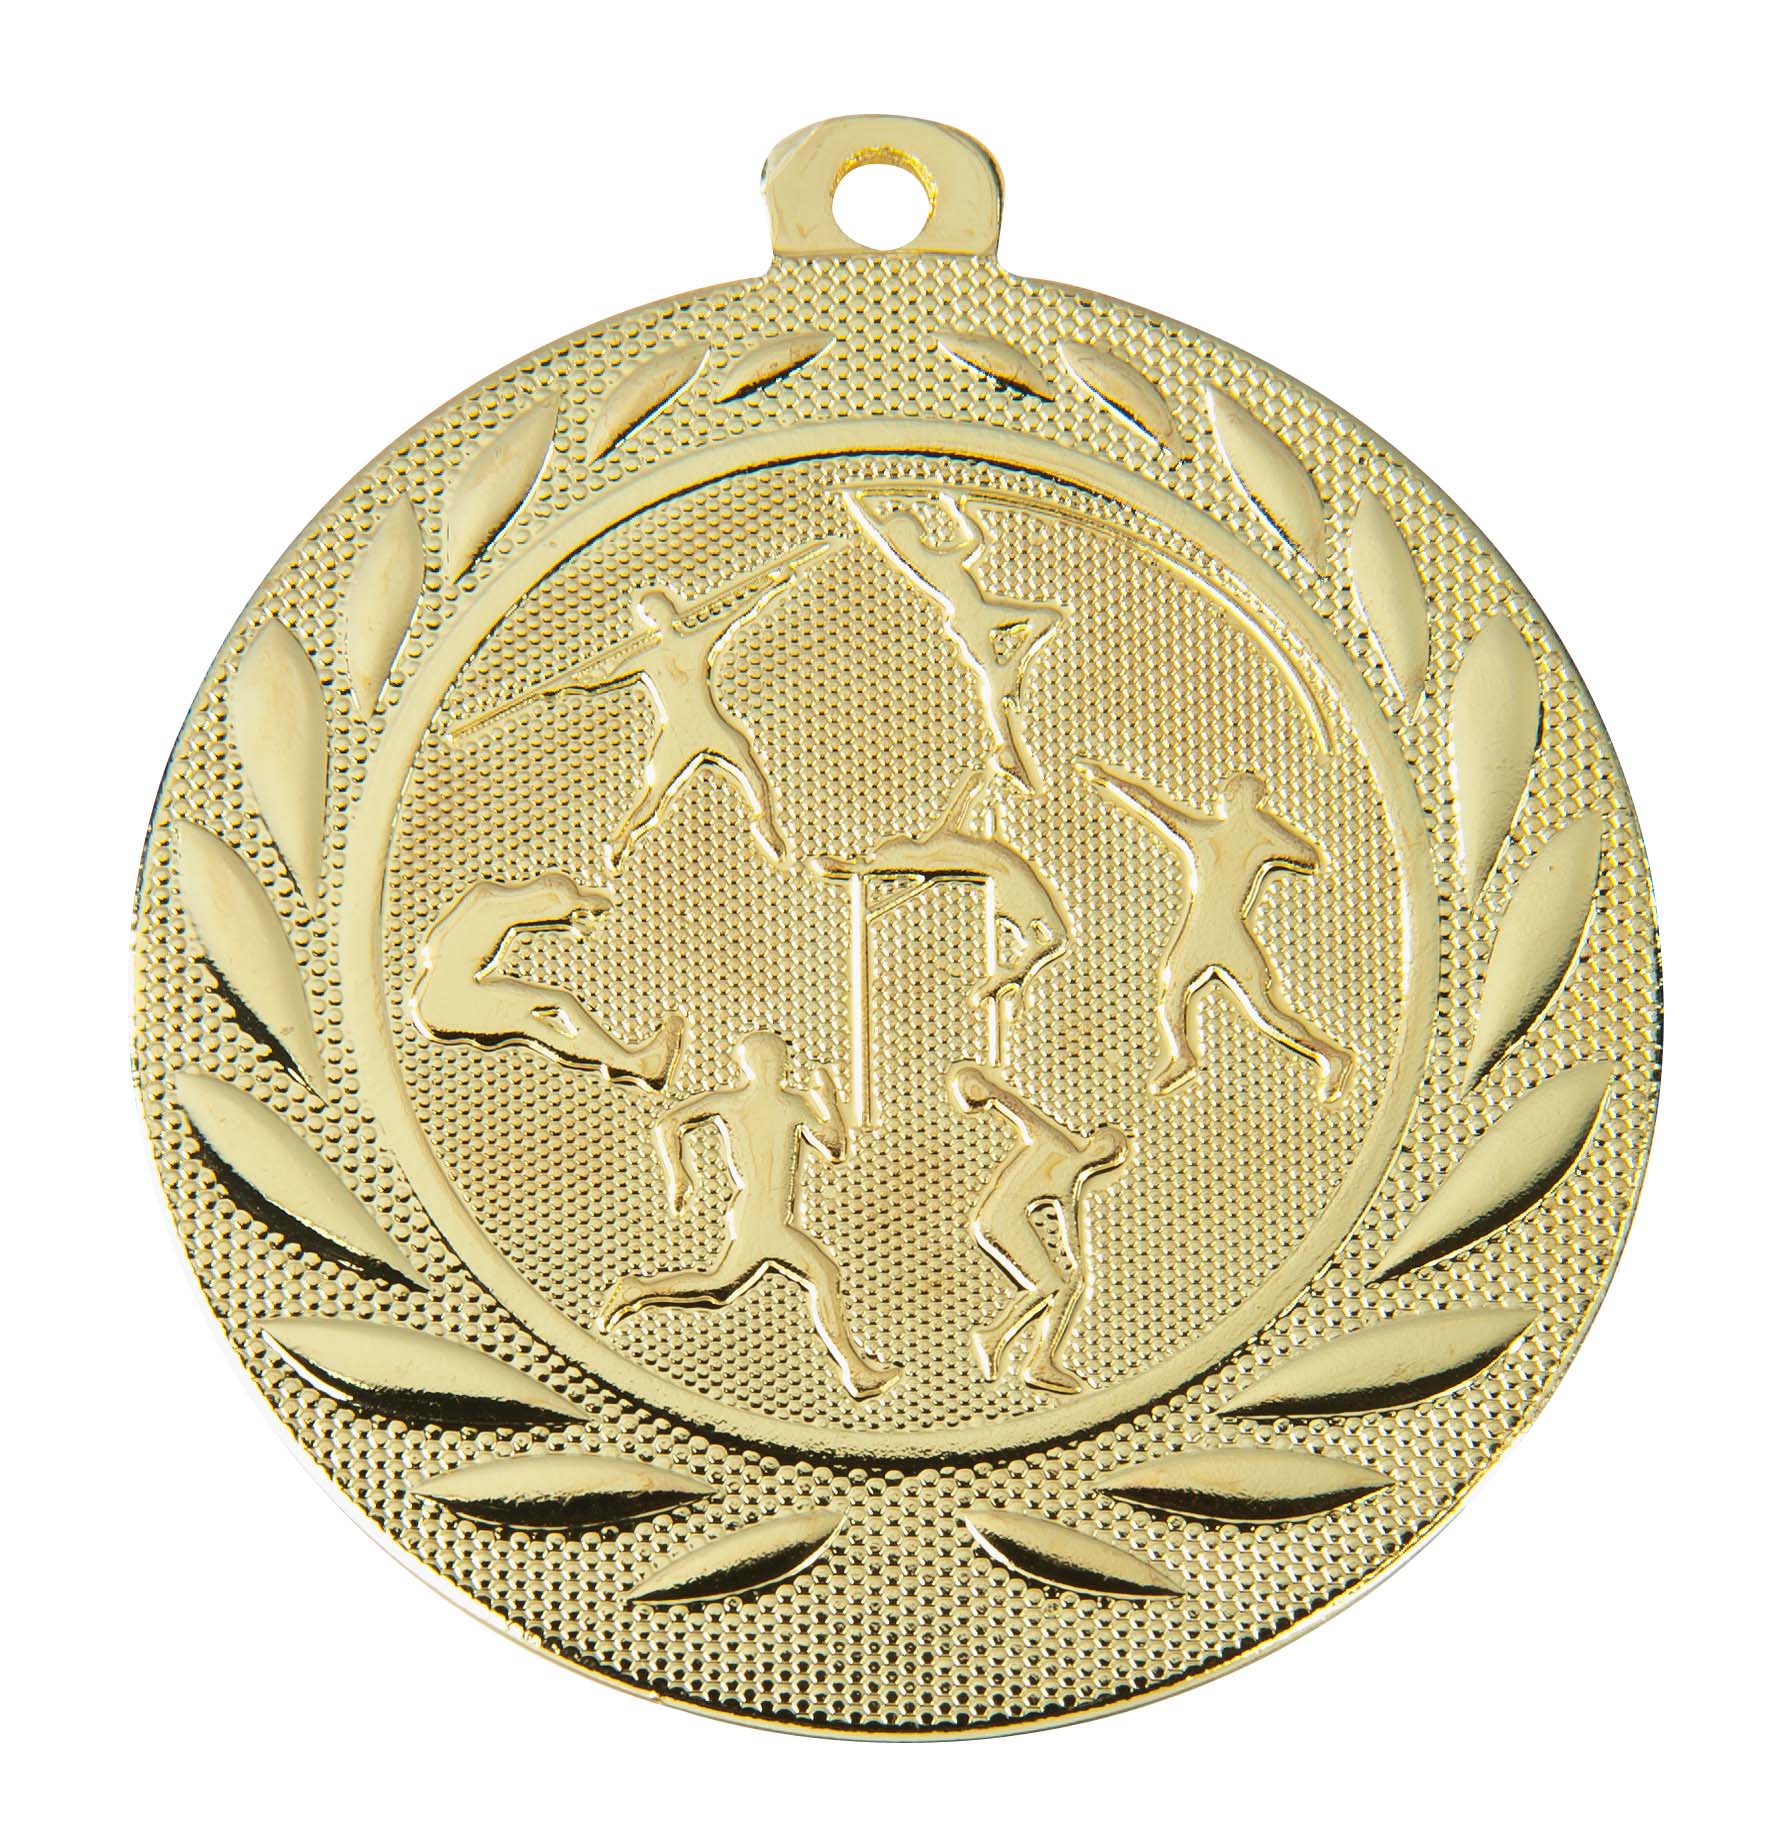 Leichtathletik-Medaille DI5000K inkl. Band und Beschriftung Gold Fertig montiert gegen Aufpreis